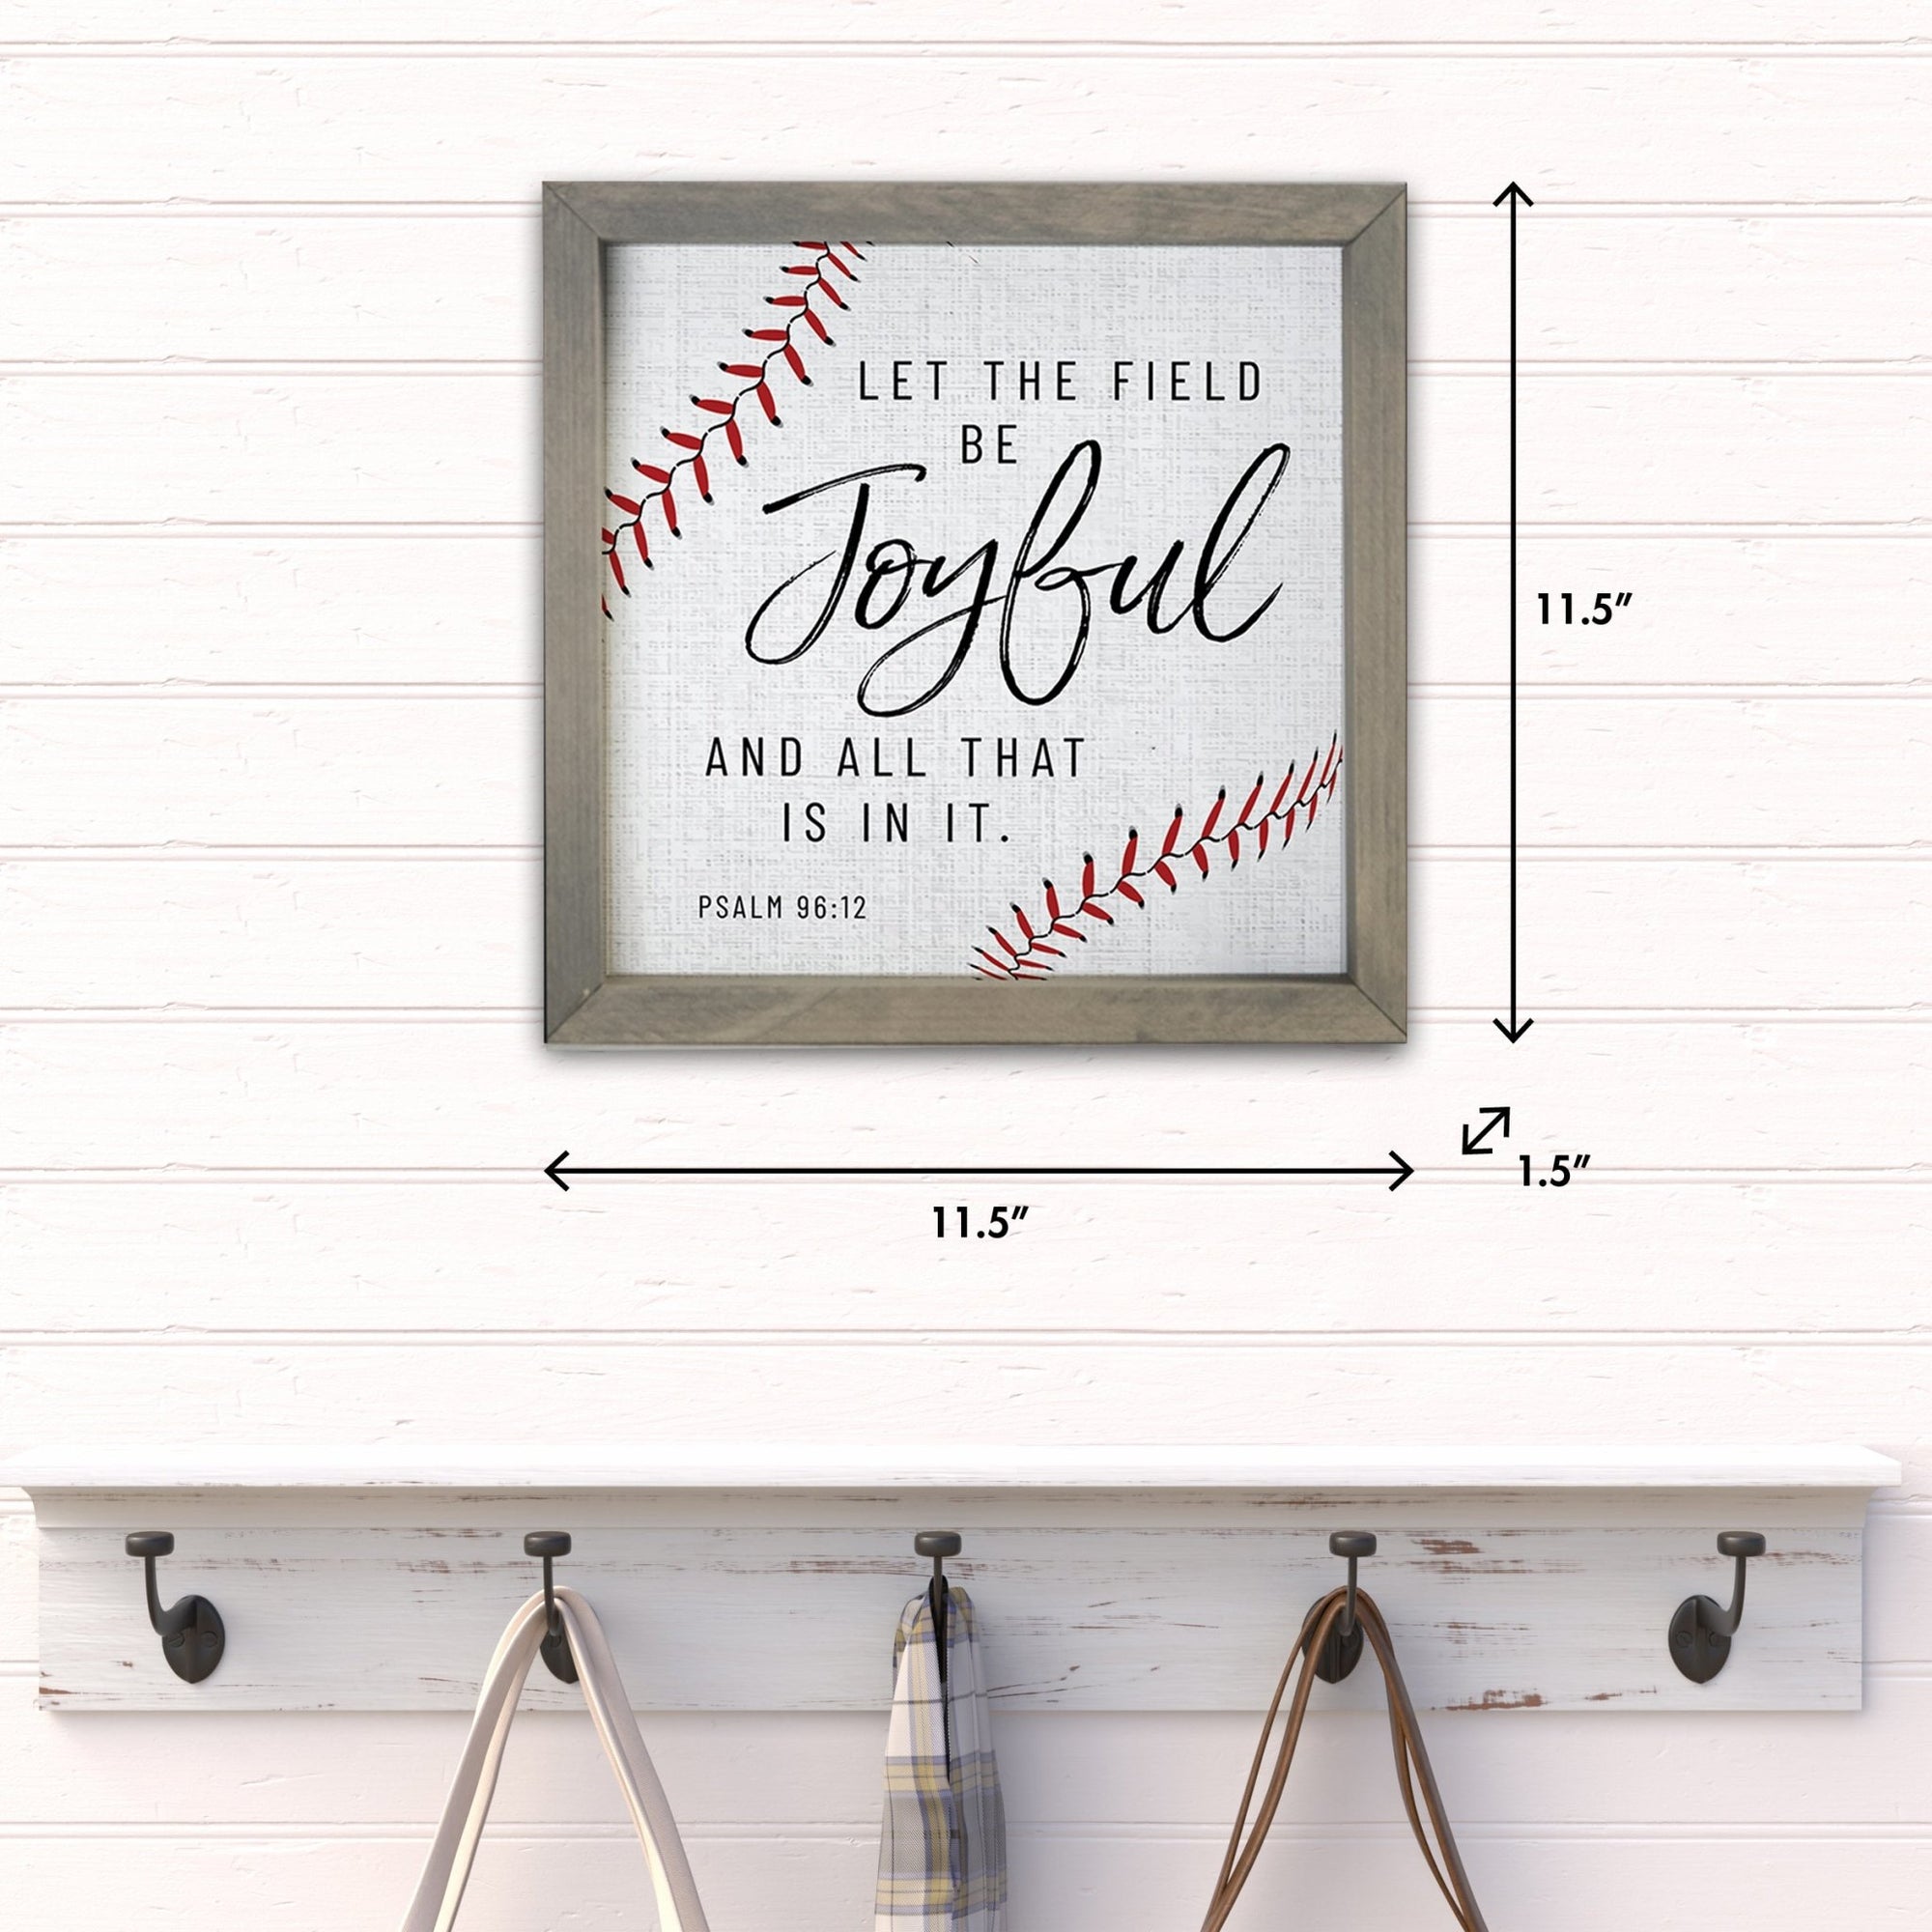 Elegant Baseball Framed Shadow Box Shelf Décor With Inspiring Bible Verses - Joyful - LifeSong Milestones